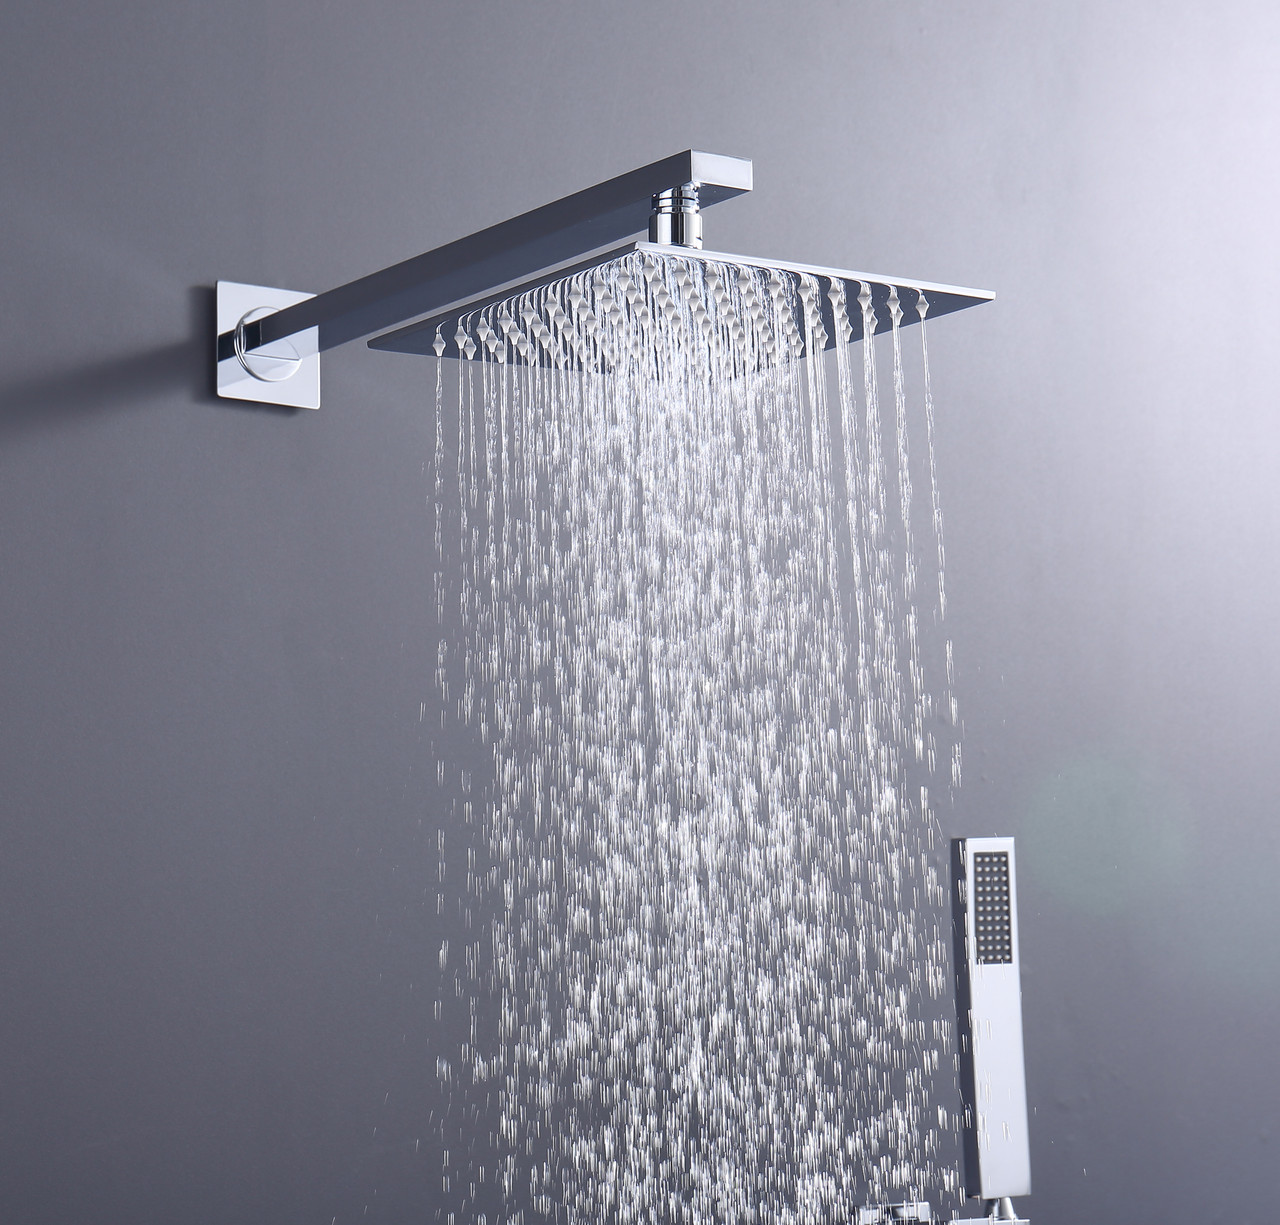 Alam Empolo 8 Wall mount Rain Shower Set - Chrome Finish - ALMA PREMIUM  VANITIES